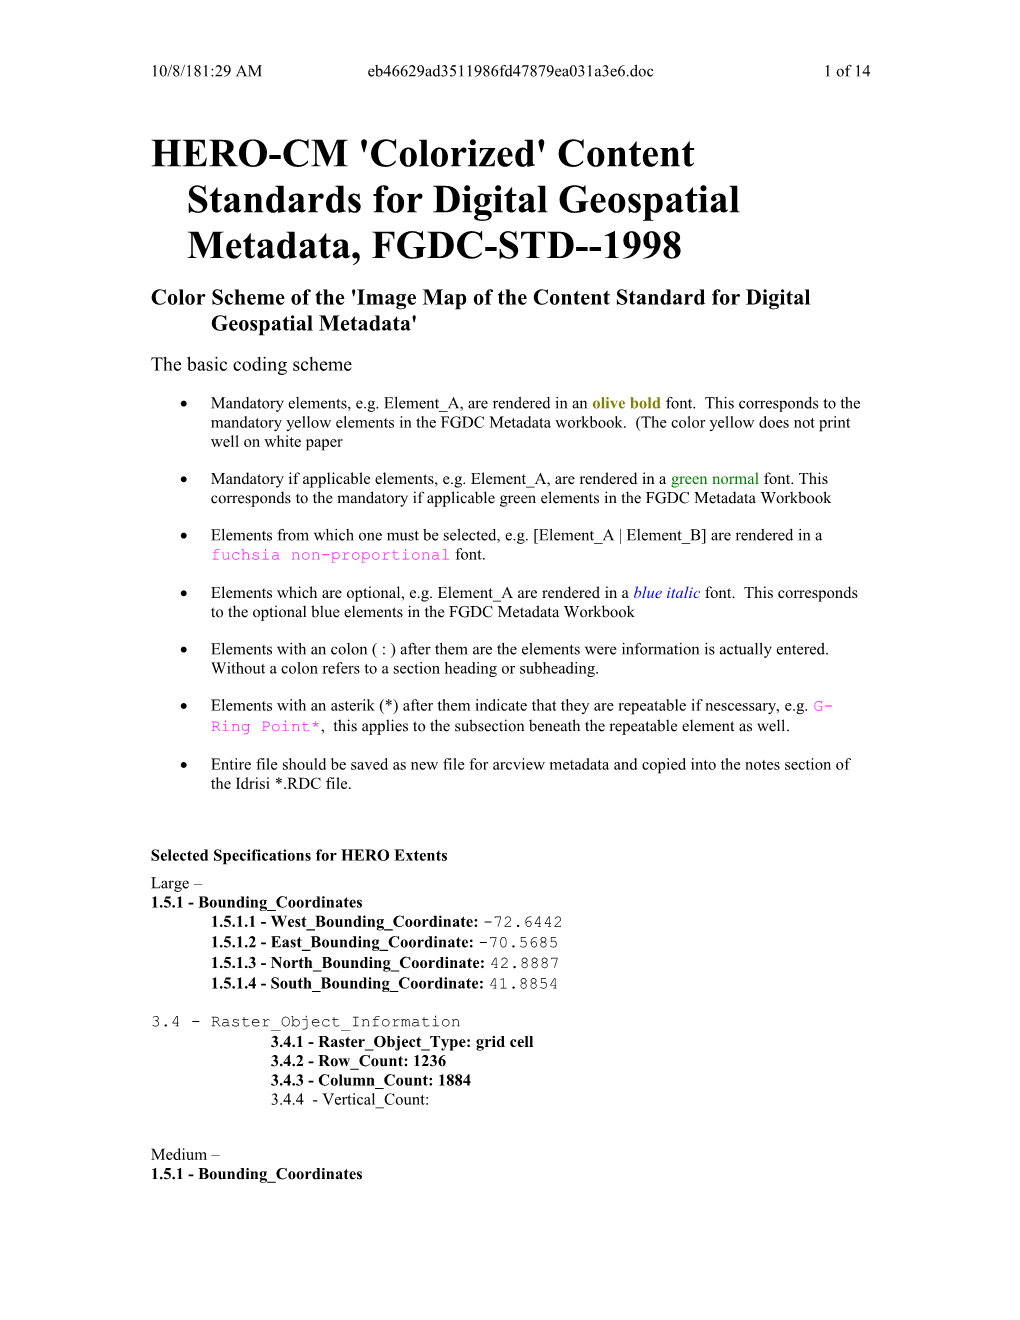 'Colorized' Content Standards for Digital Geospatial Metadata, FGDC-STD 998